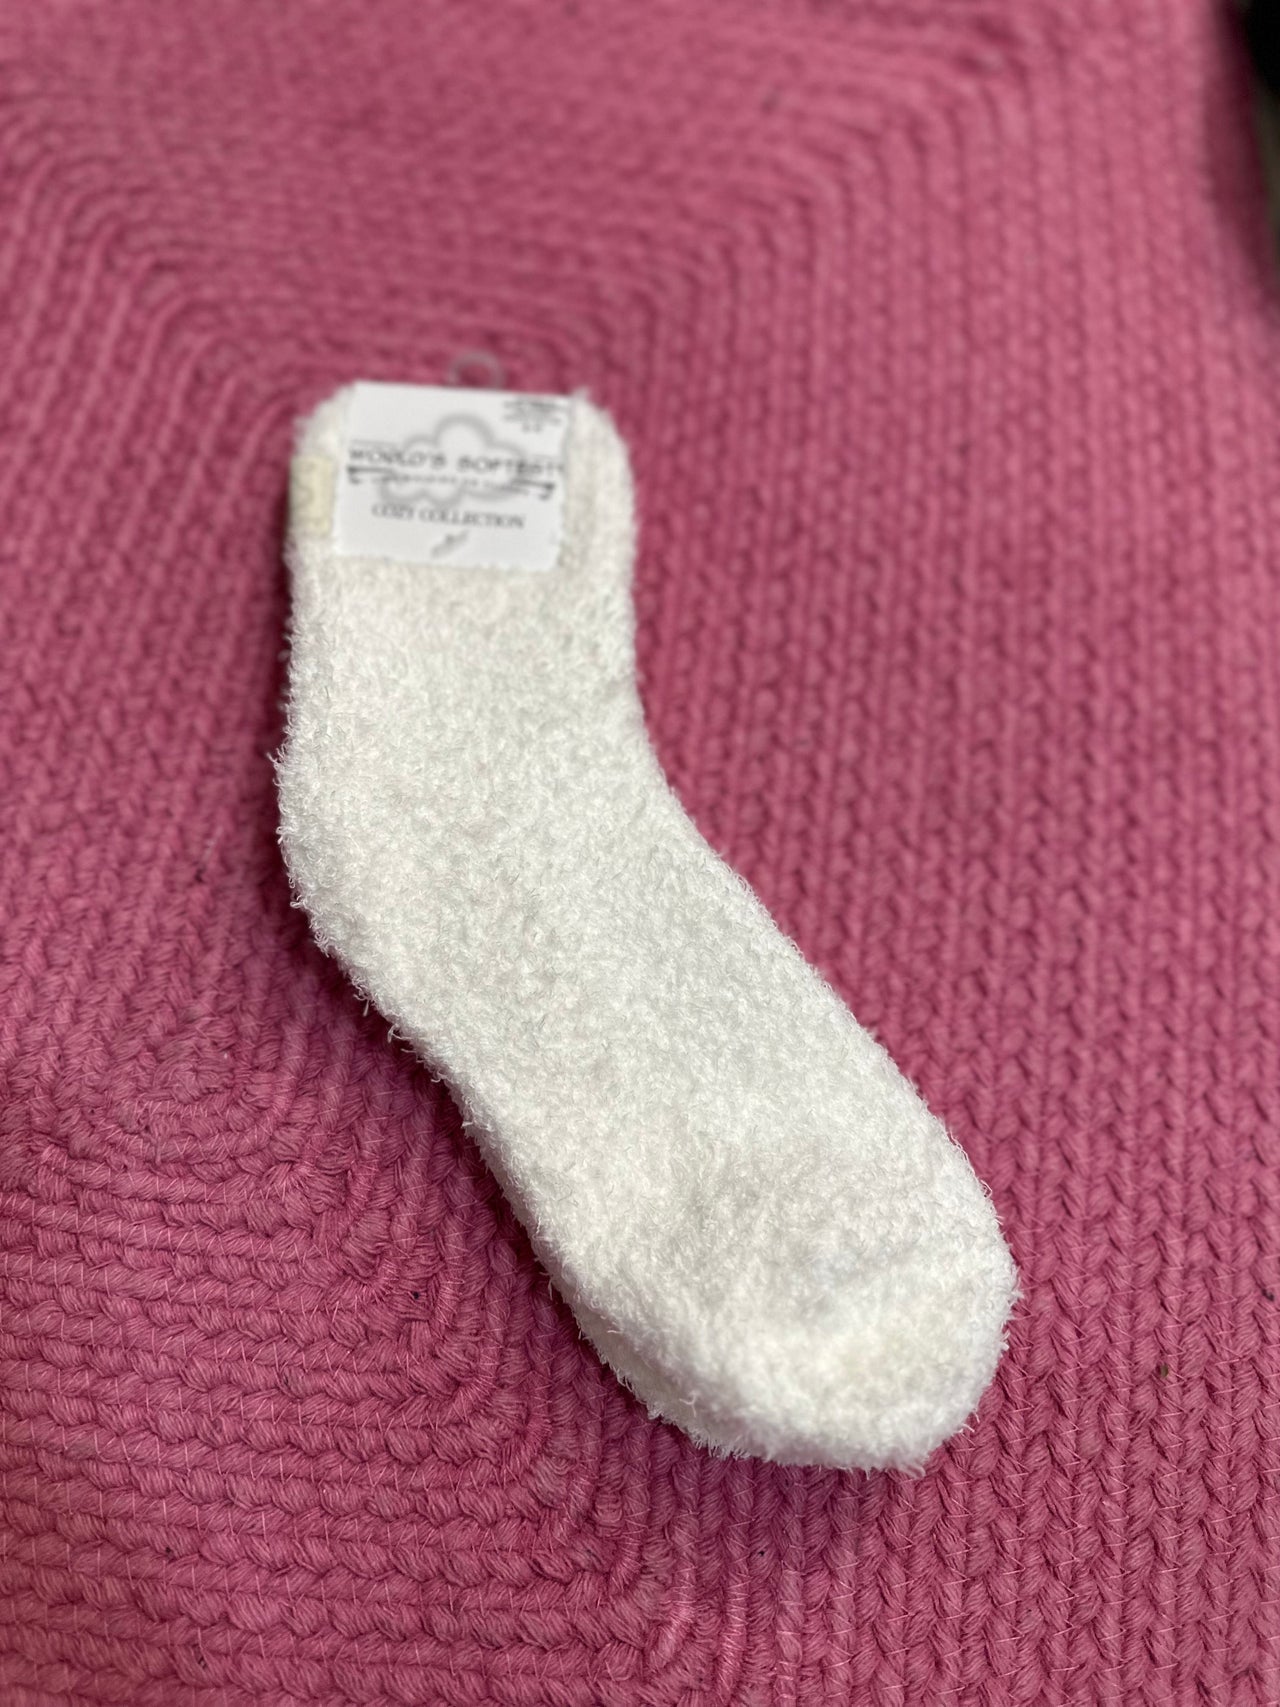 Socks by World’s Softest World's Softest Socks